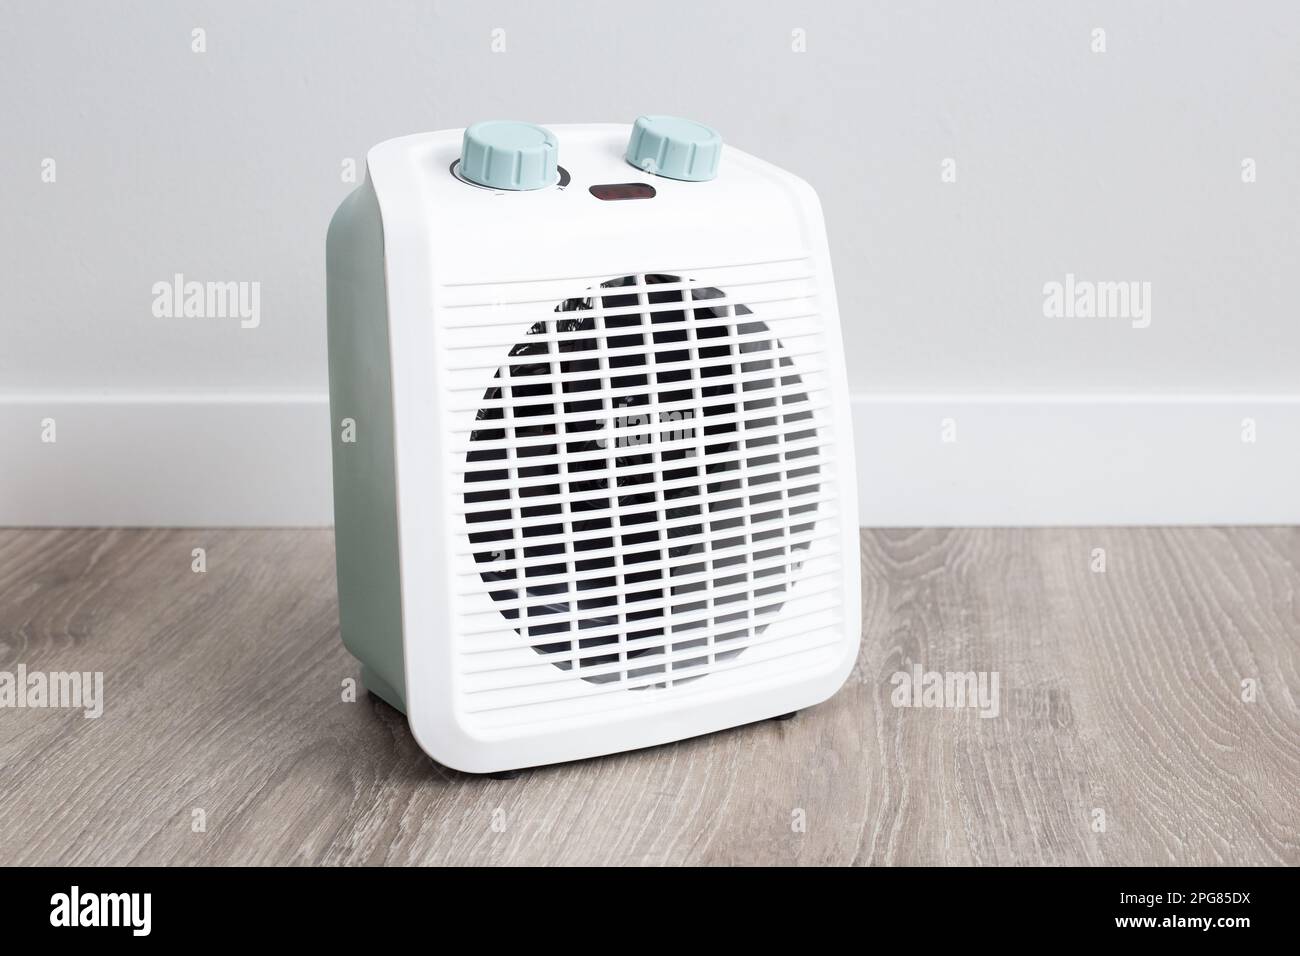 Small electric heater -Fotos und -Bildmaterial in hoher Auflösung – Alamy